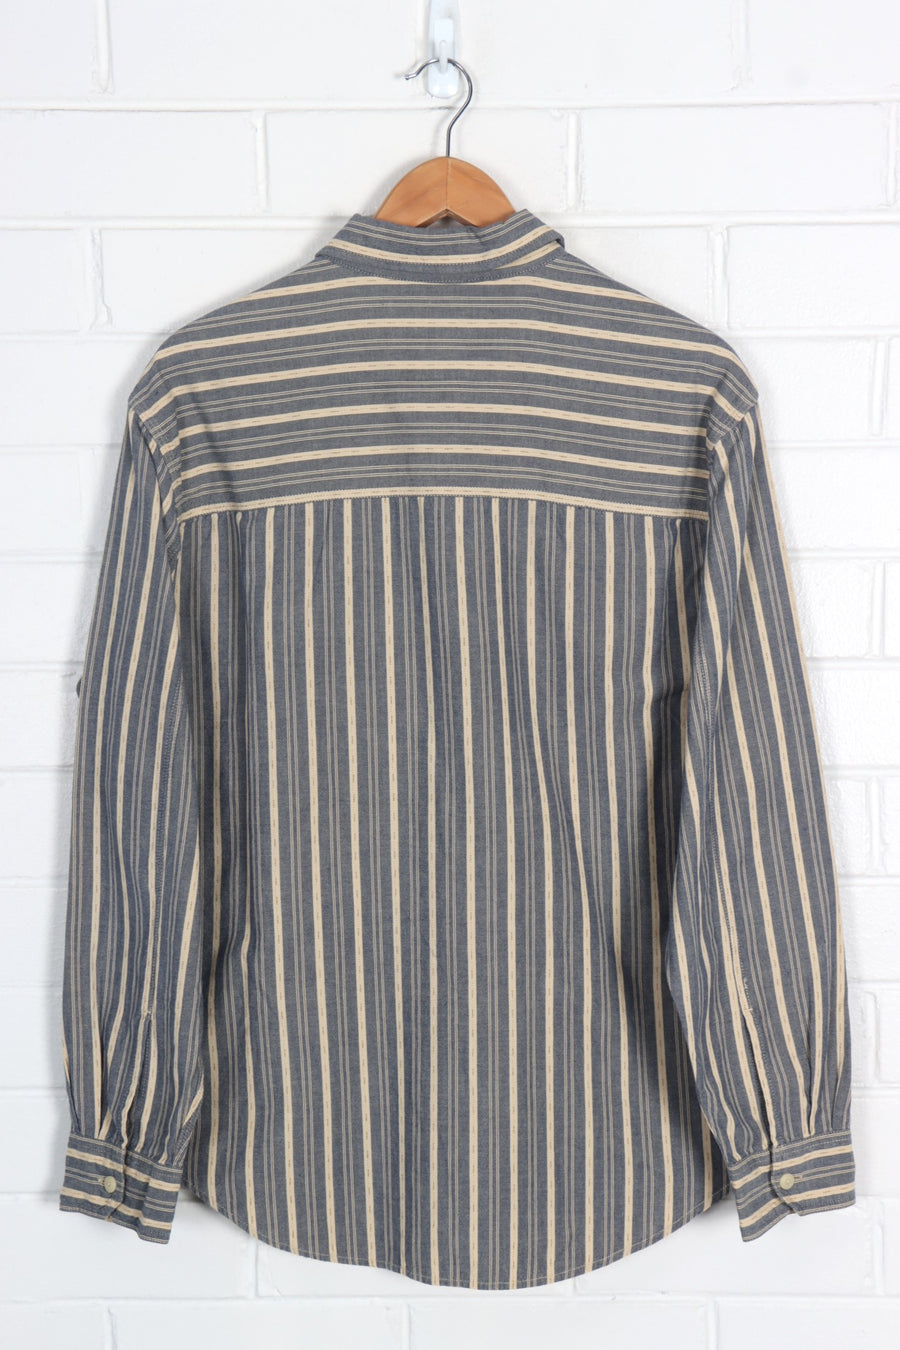 LEVI'S Blue & Beige Striped Button Up Long Sleeve Shirt (L-XL)